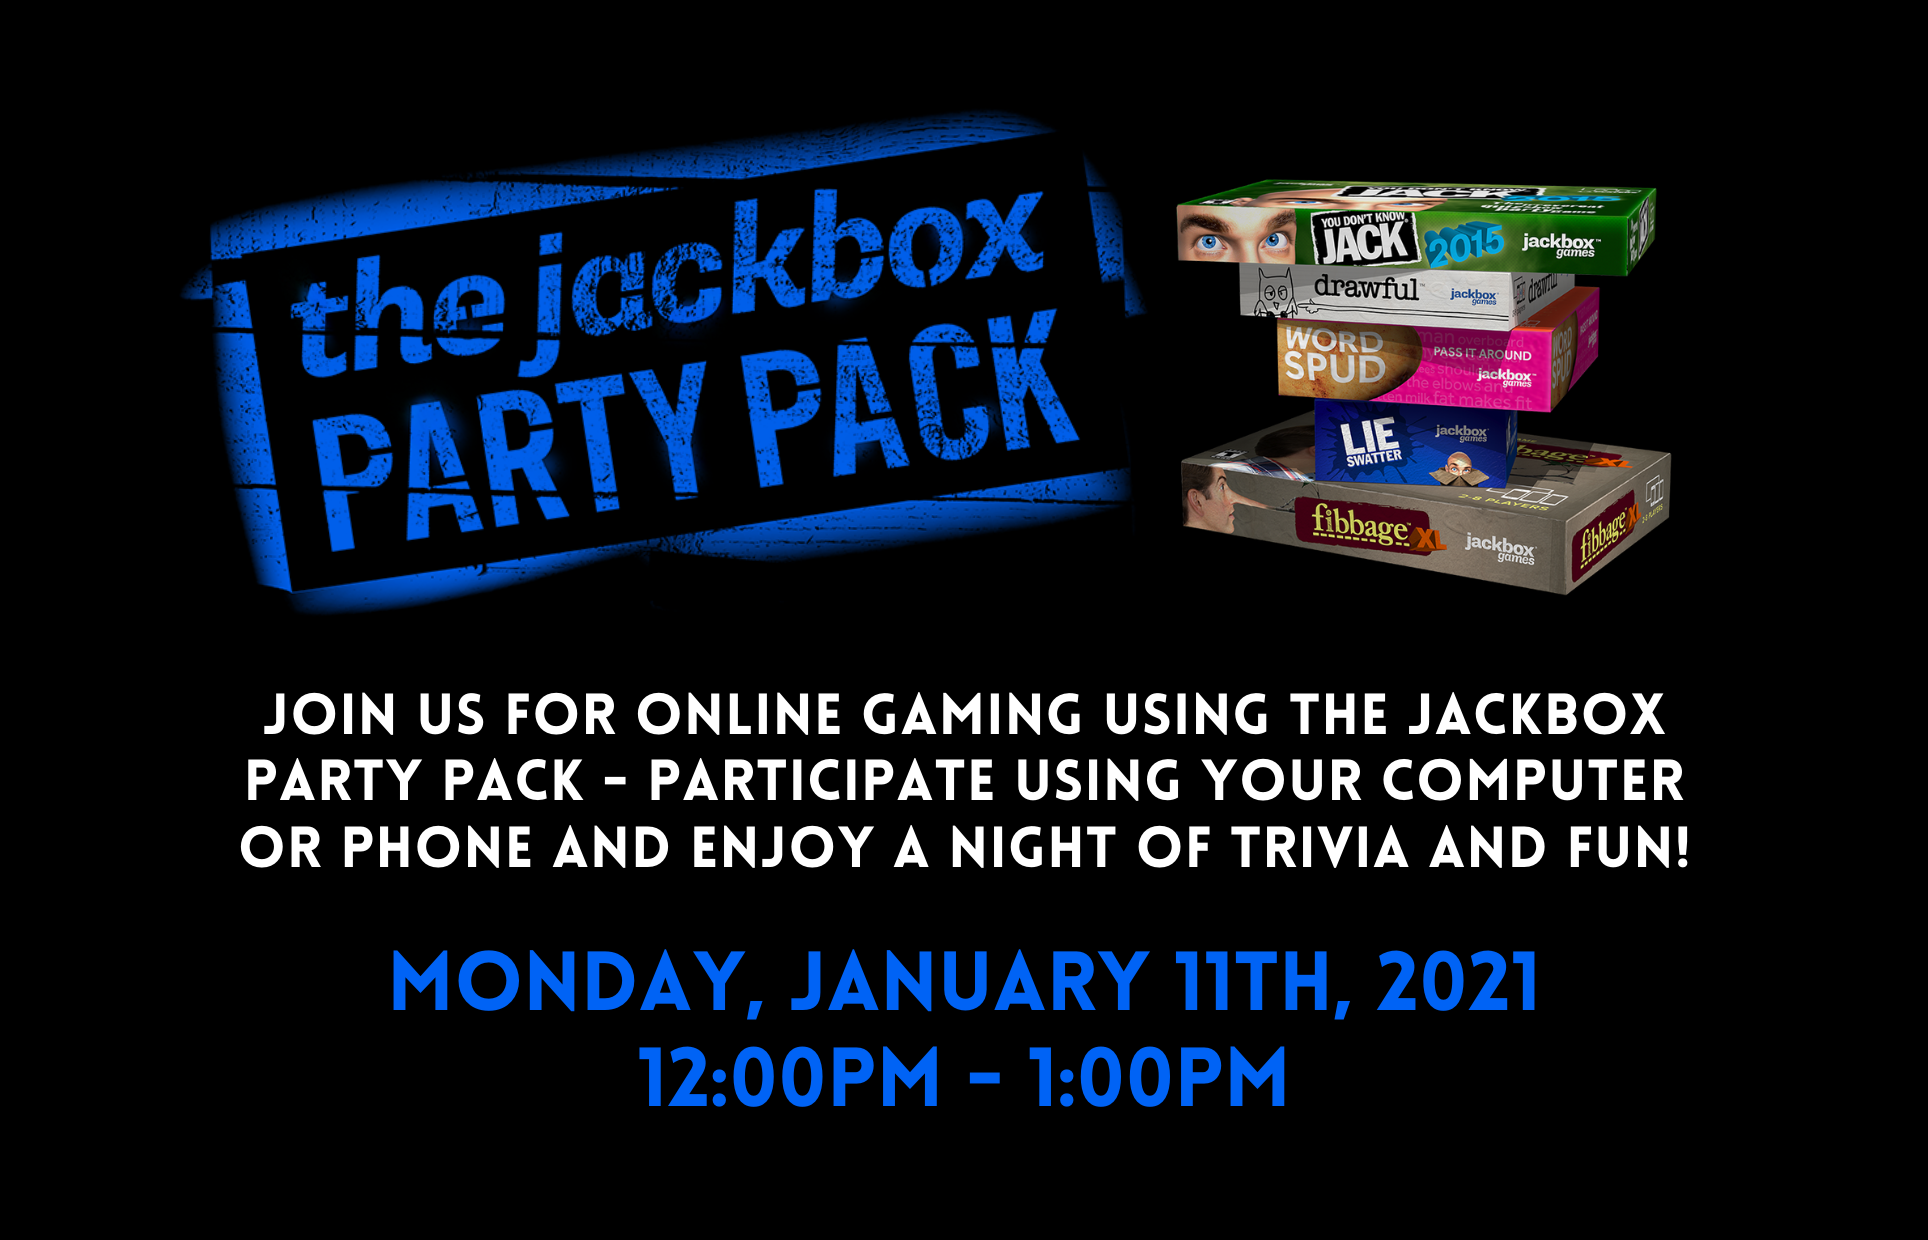 jackbox online gaming event